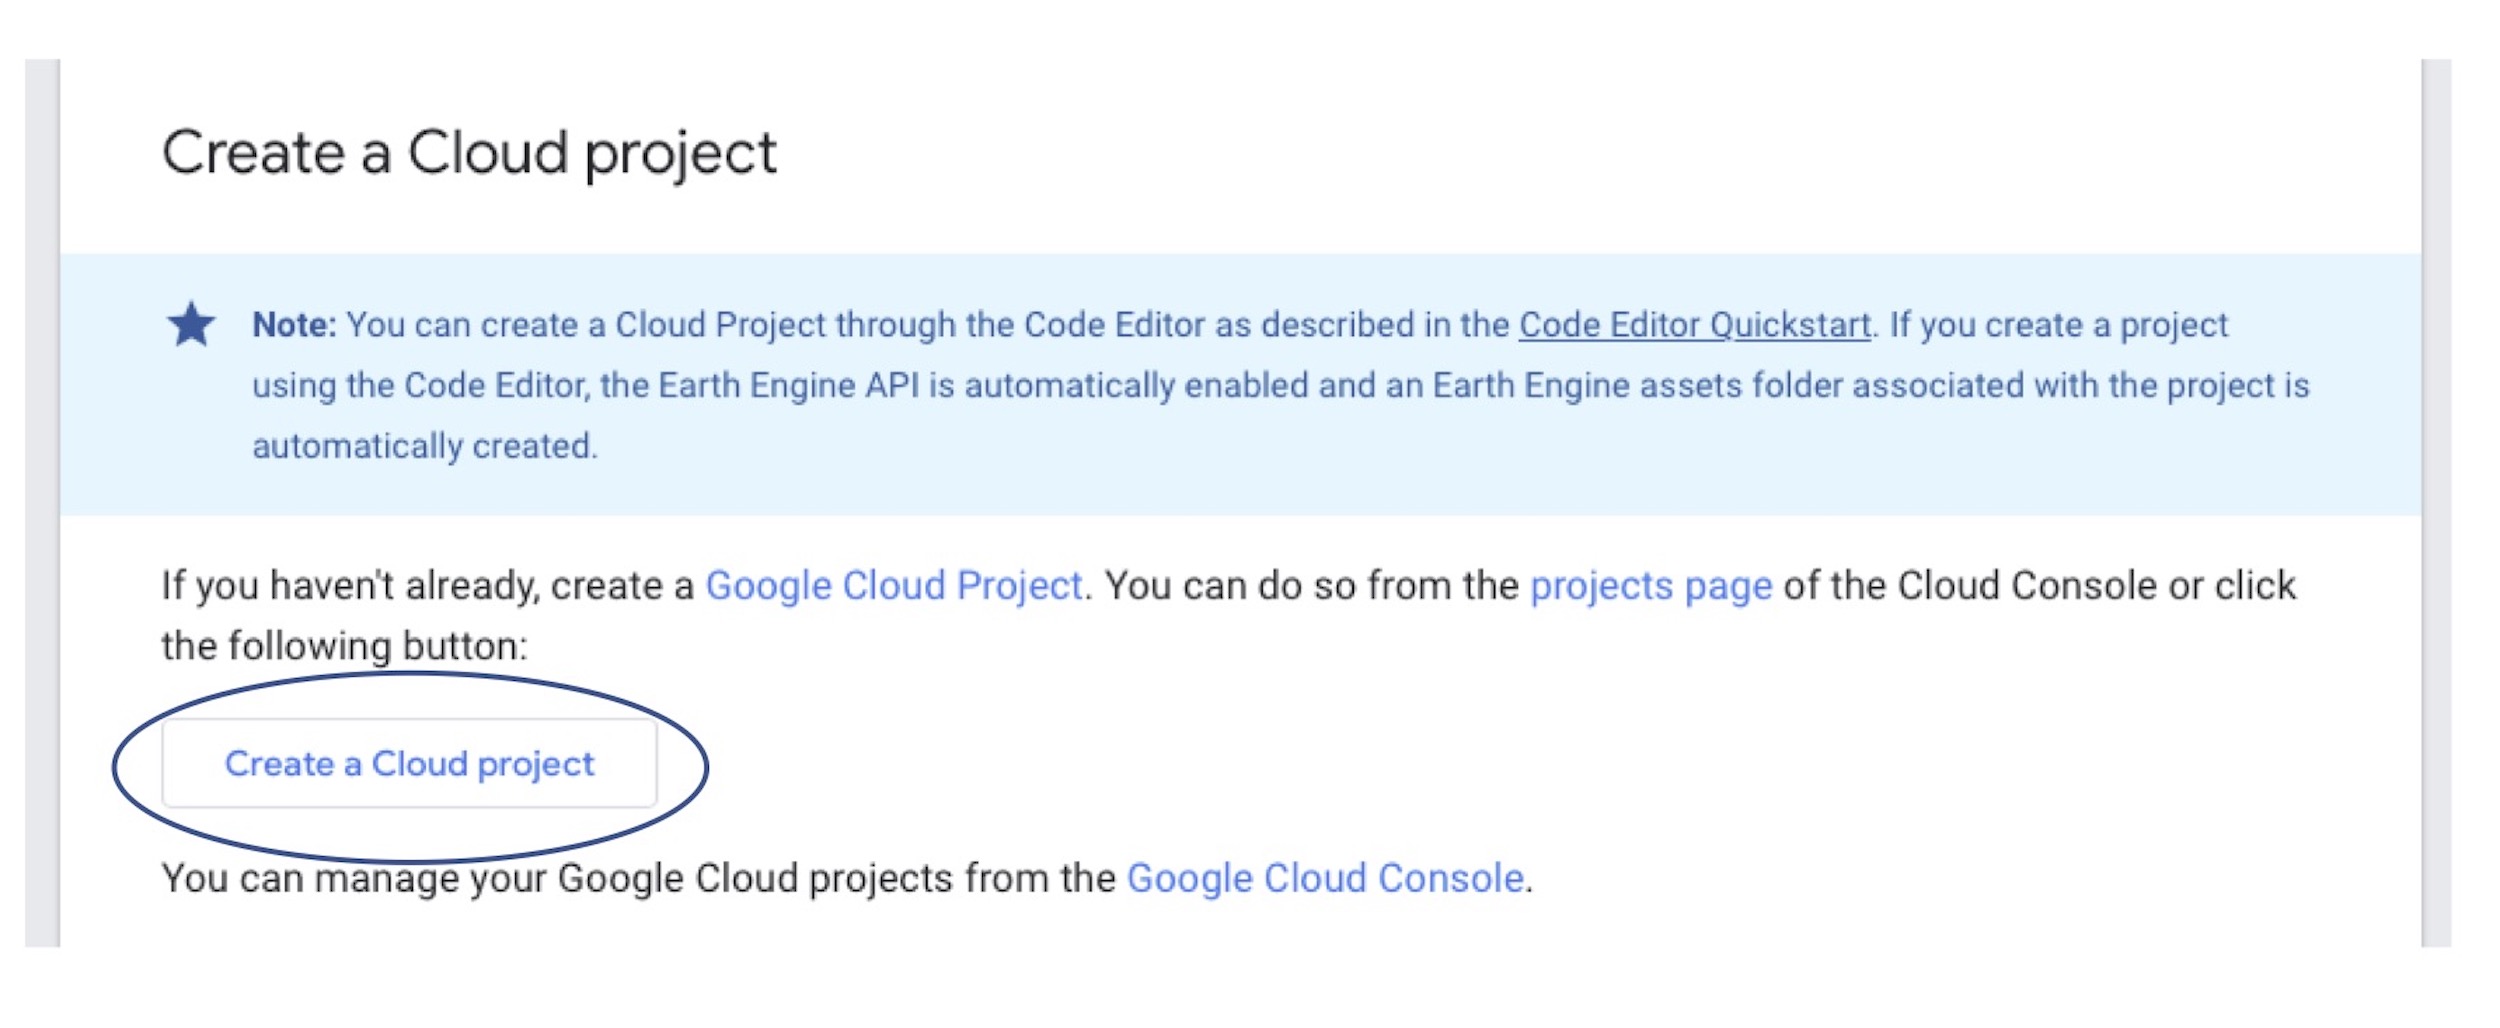 Create cloud project page screenshot